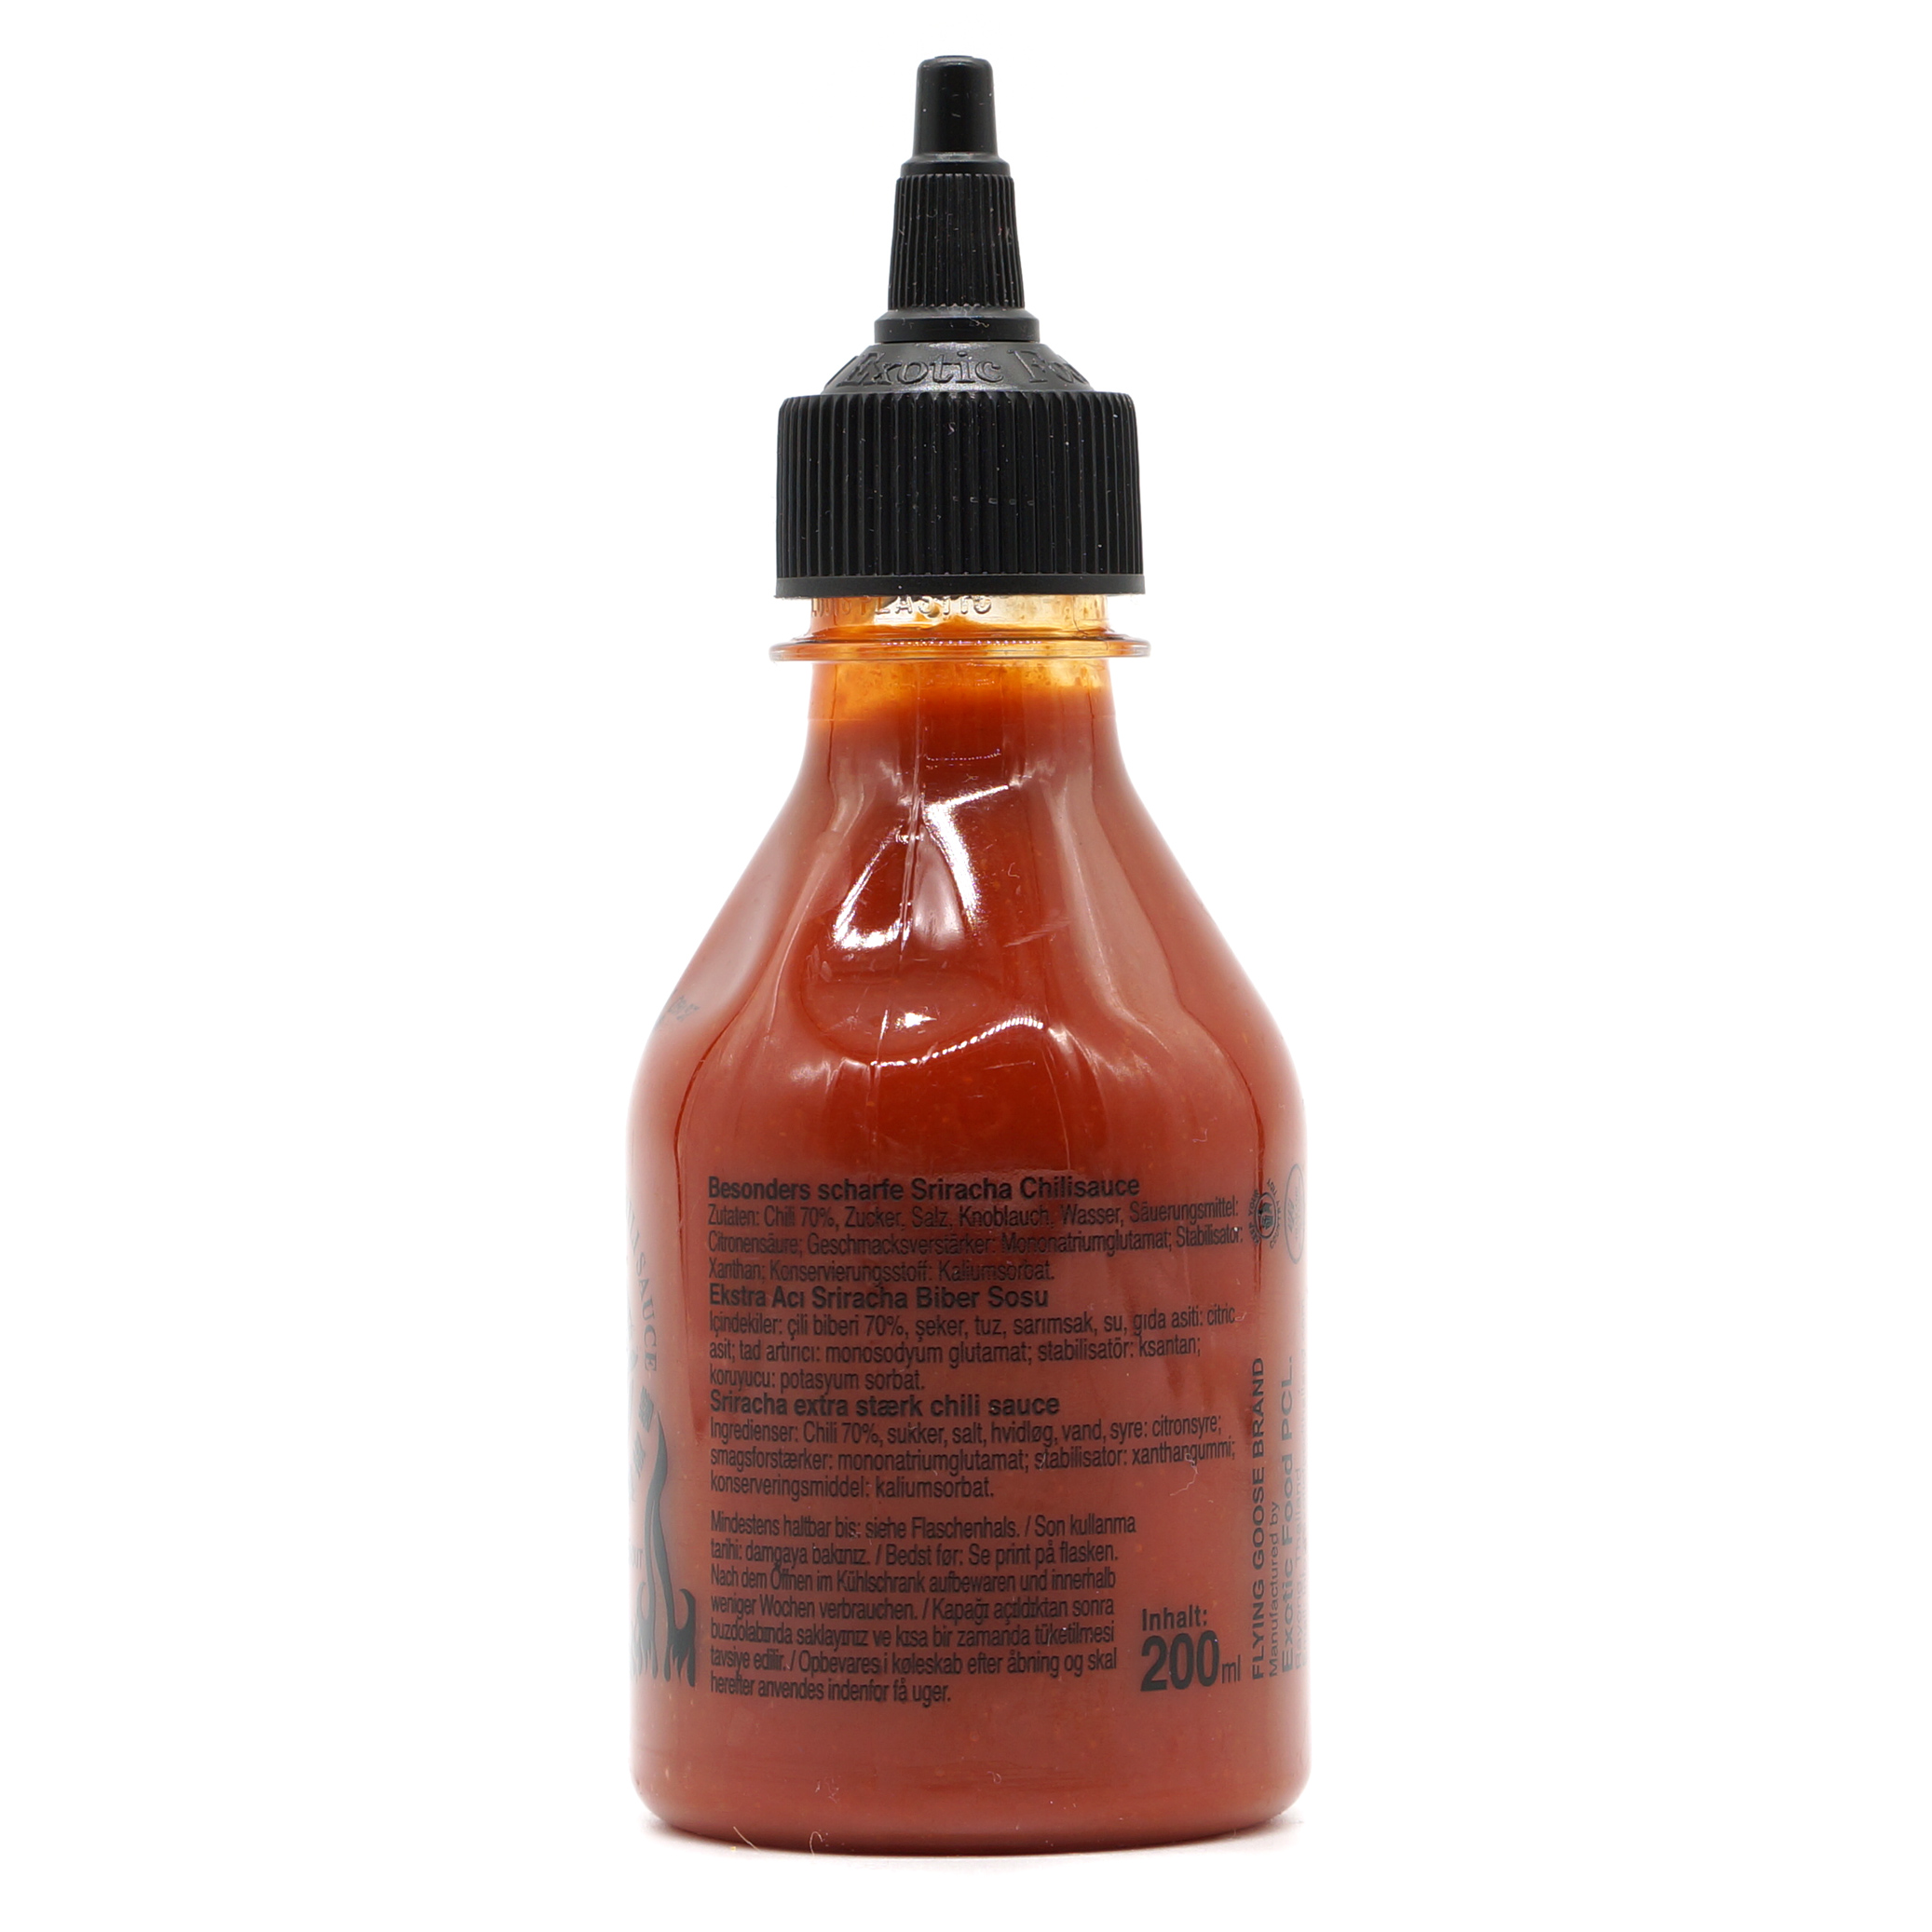 Sriracha Blackout Sauce extrem scharf - Flying Goose - 200ml